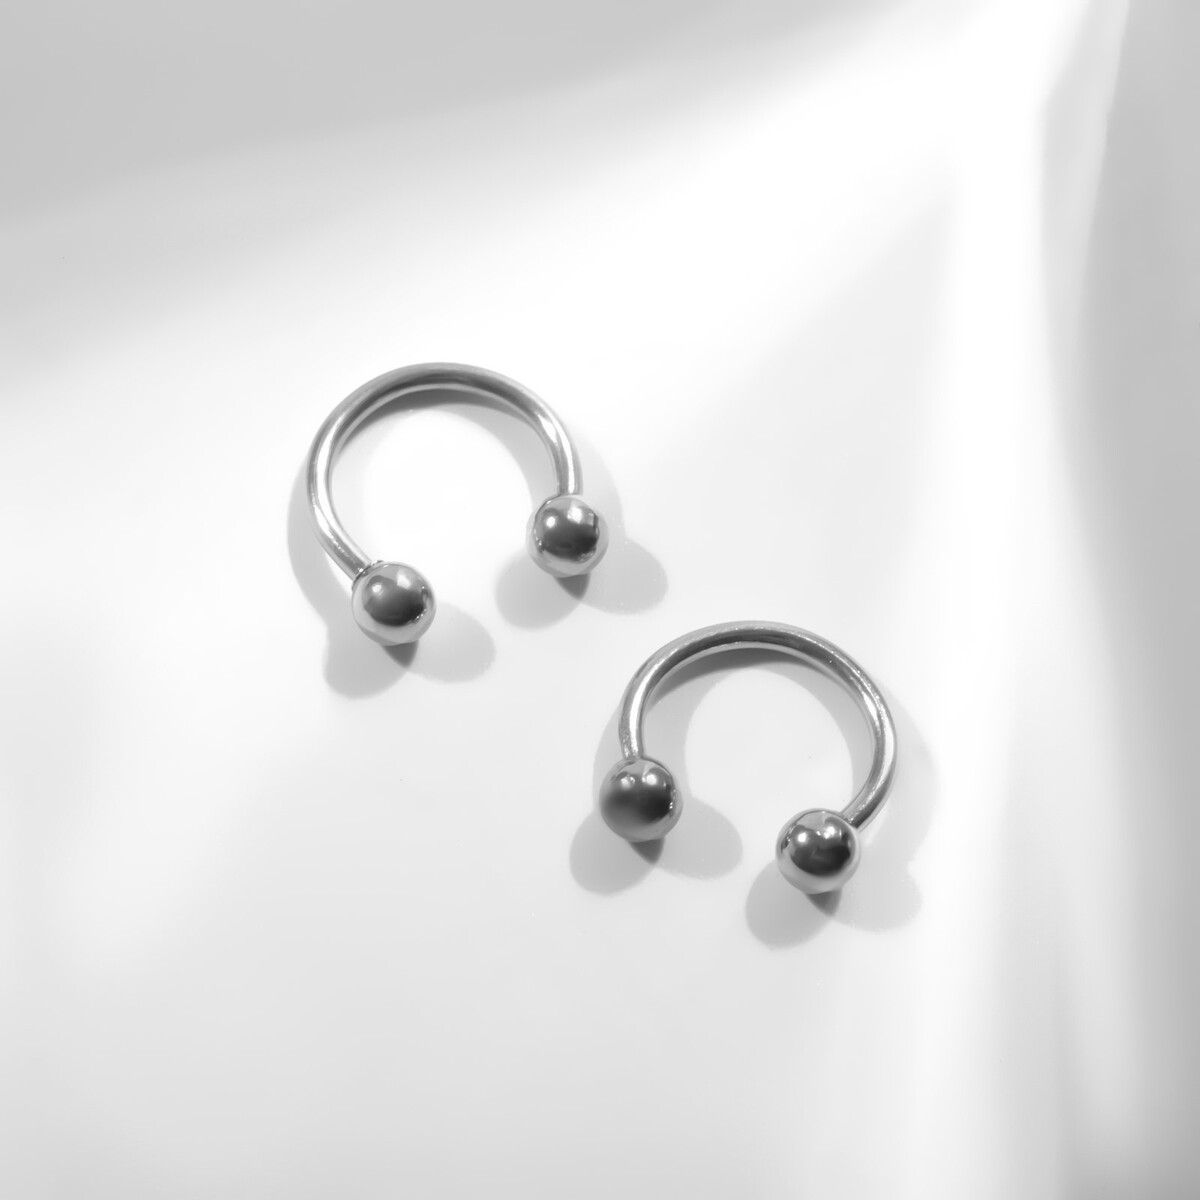 Циркуляр в бровь (пирсинг), шар, d=8 мм, пара, цвет серебро пирсинг в ухо кольцо солнце d 13мм серебро